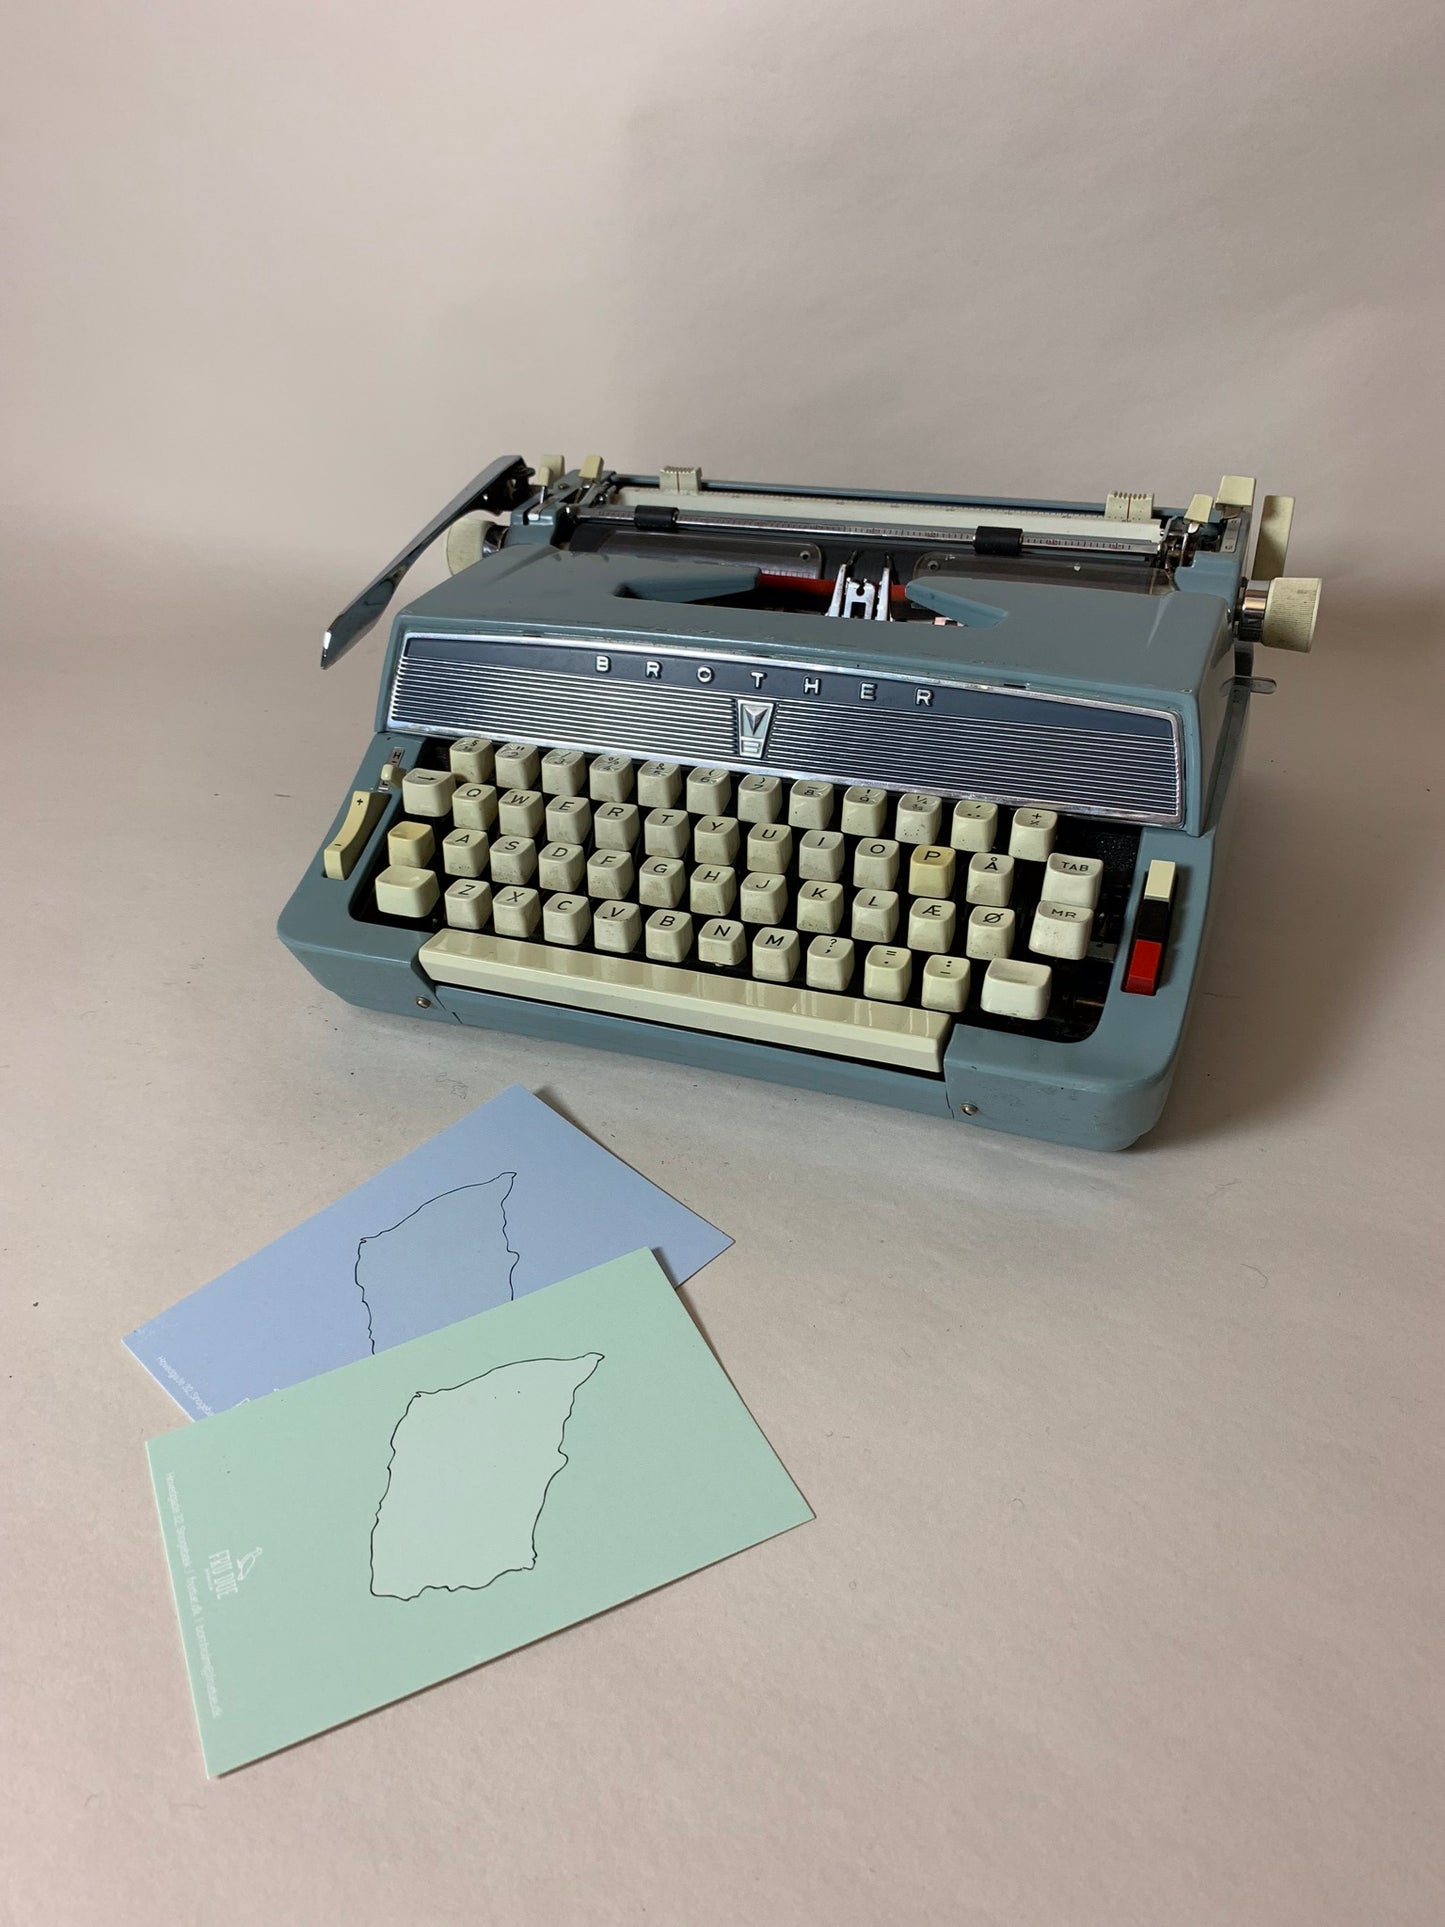 Dekorativ lyseblå skrivemaskine “Brother”